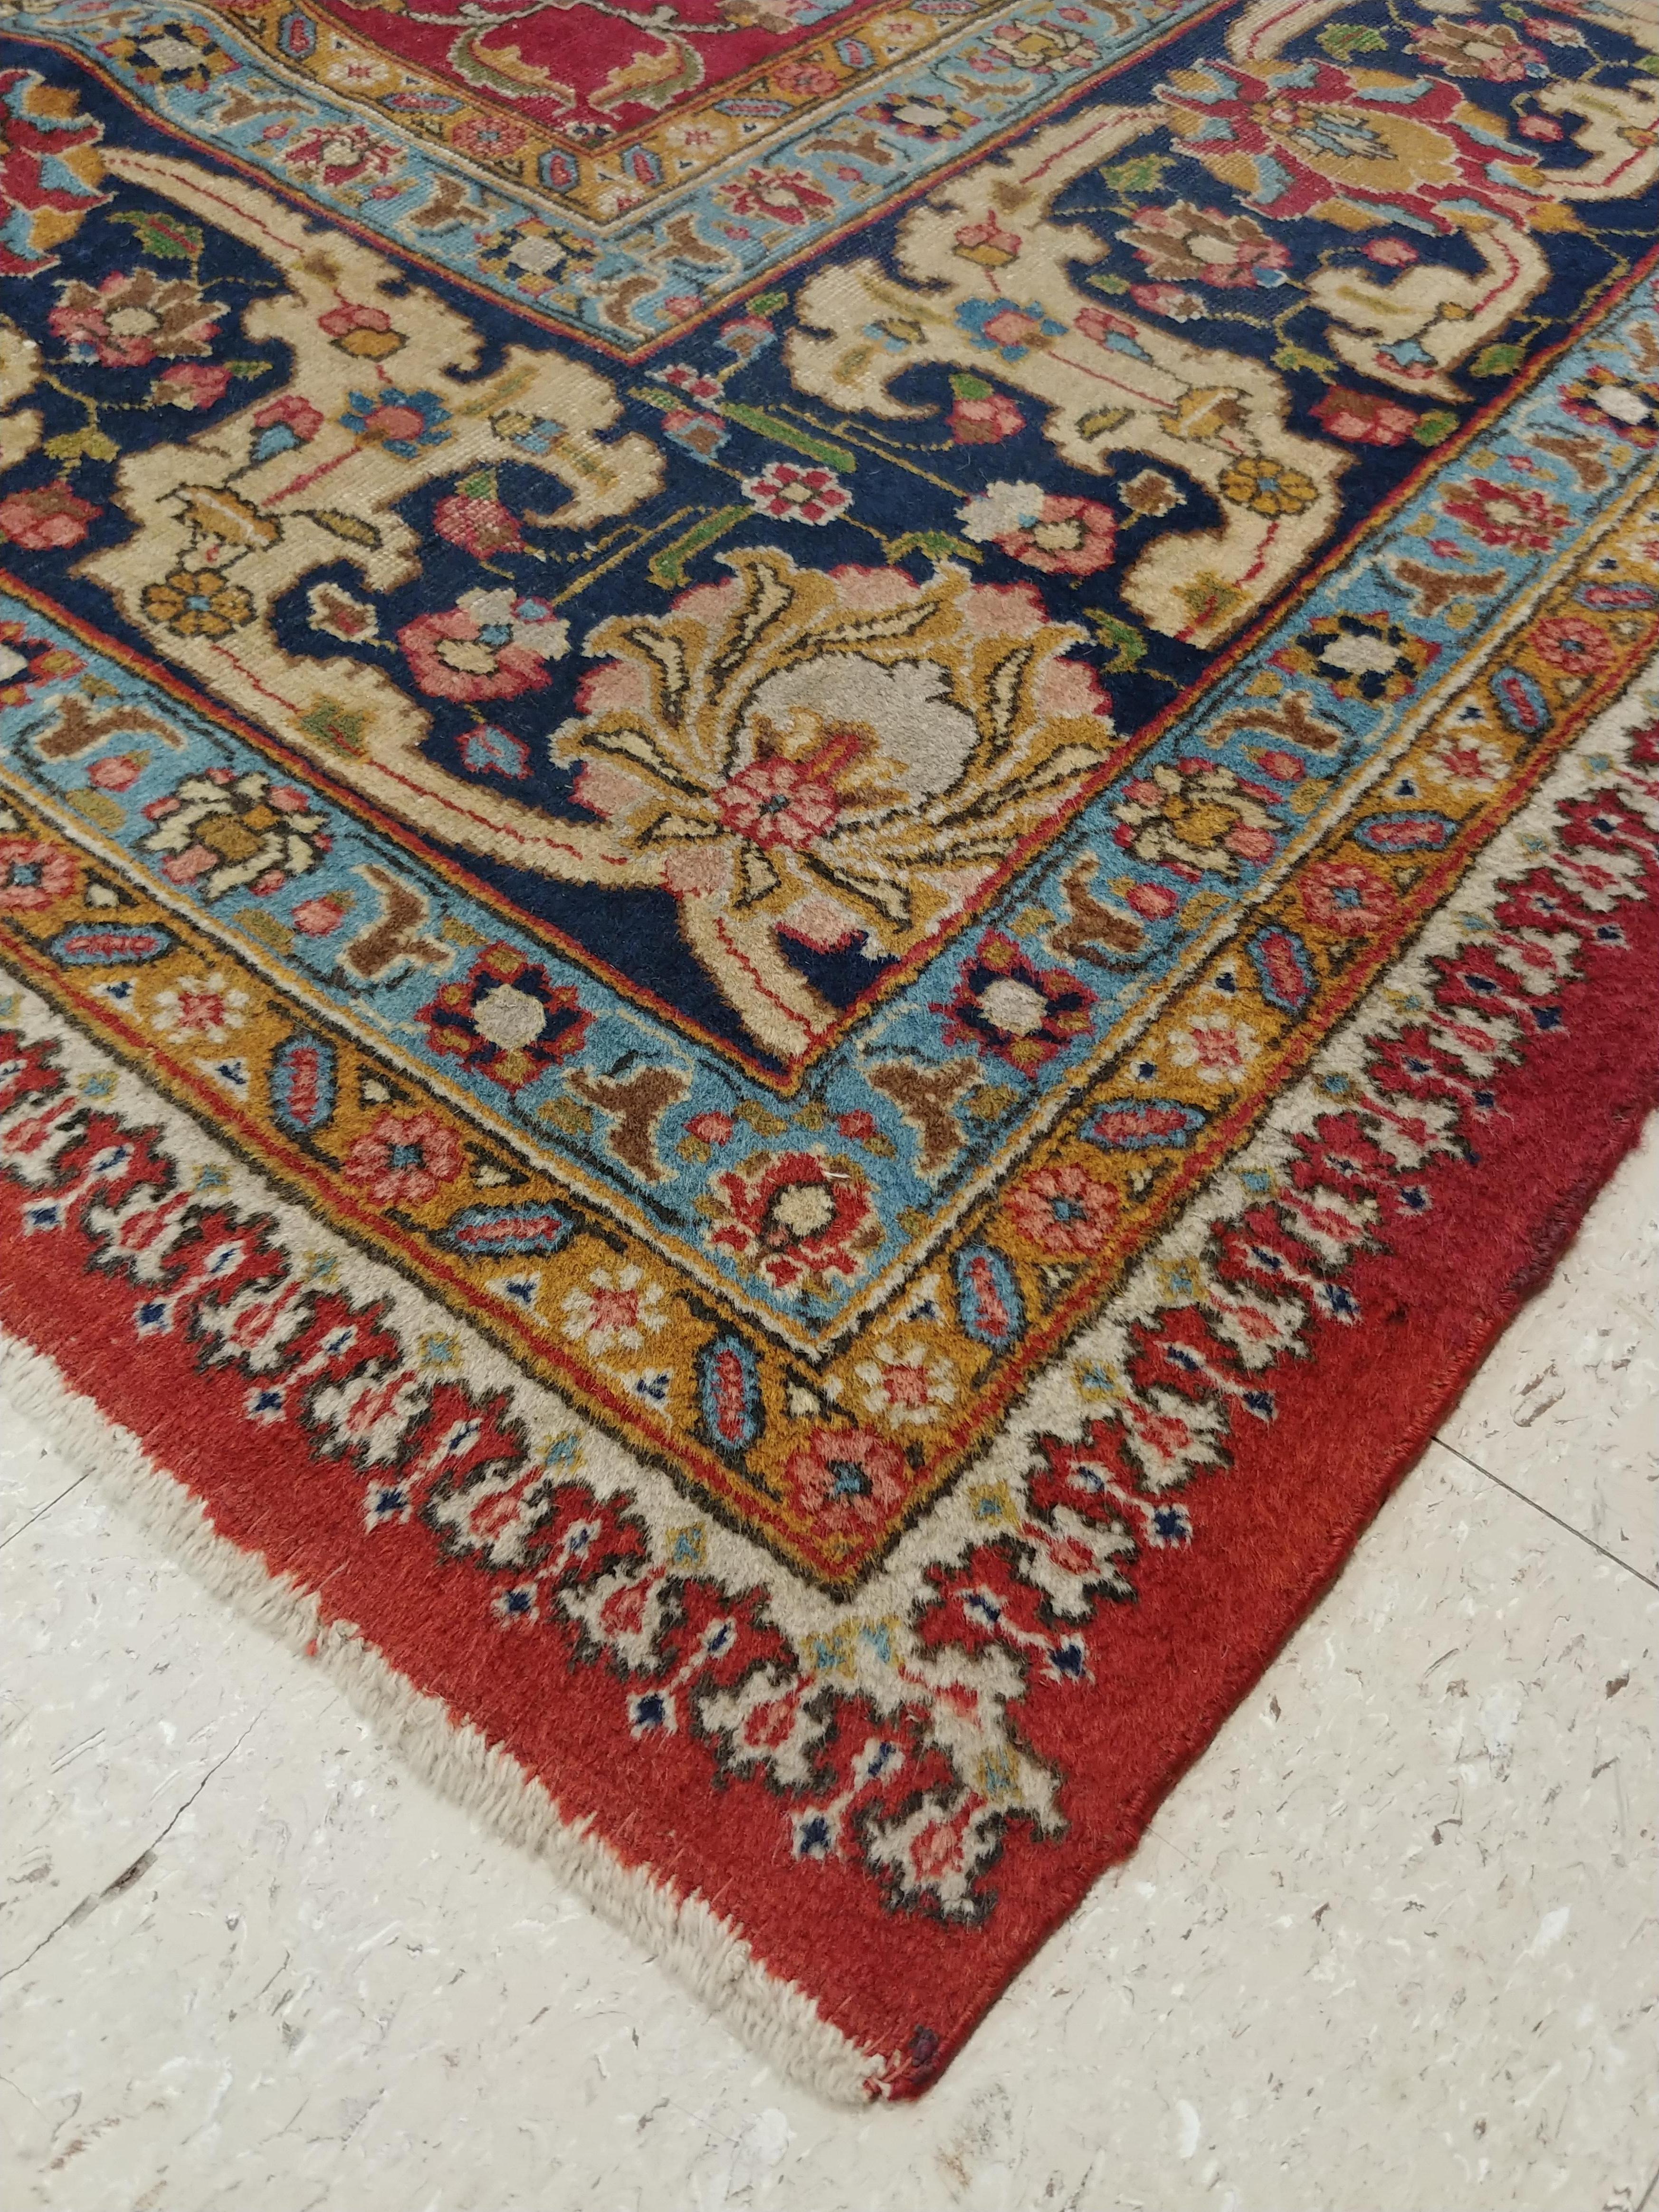 20th Century Antique Tabriz Persian Carpet, Handmade Oriental Rug, Red, Caramel, Light Blue